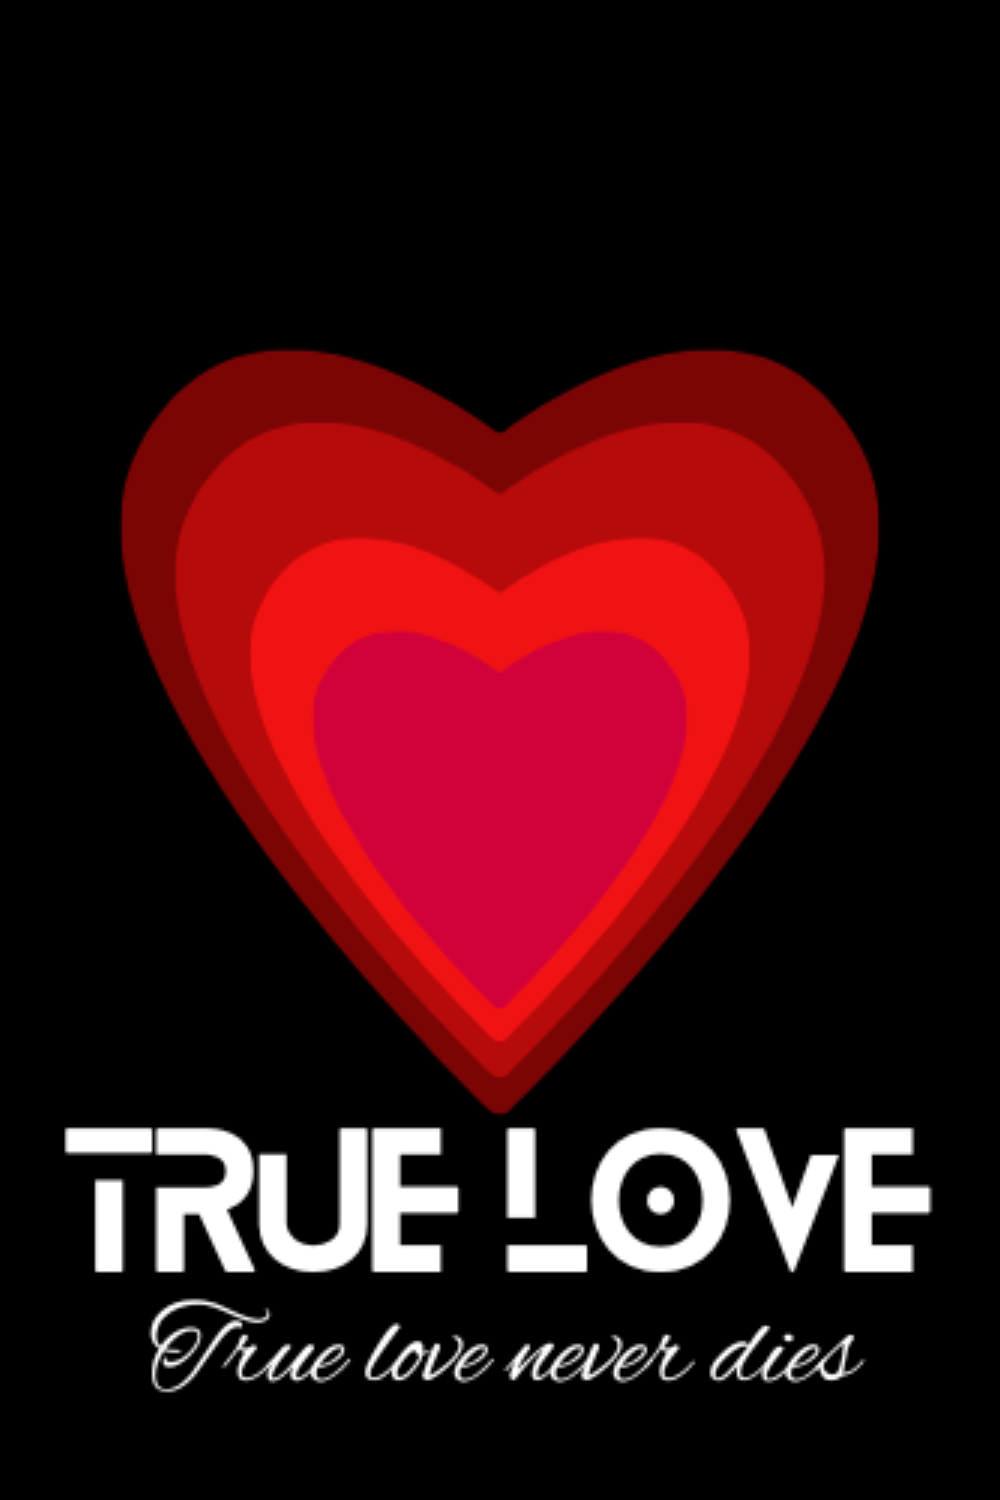 HEART-TRUE LOVE pinterest preview image.